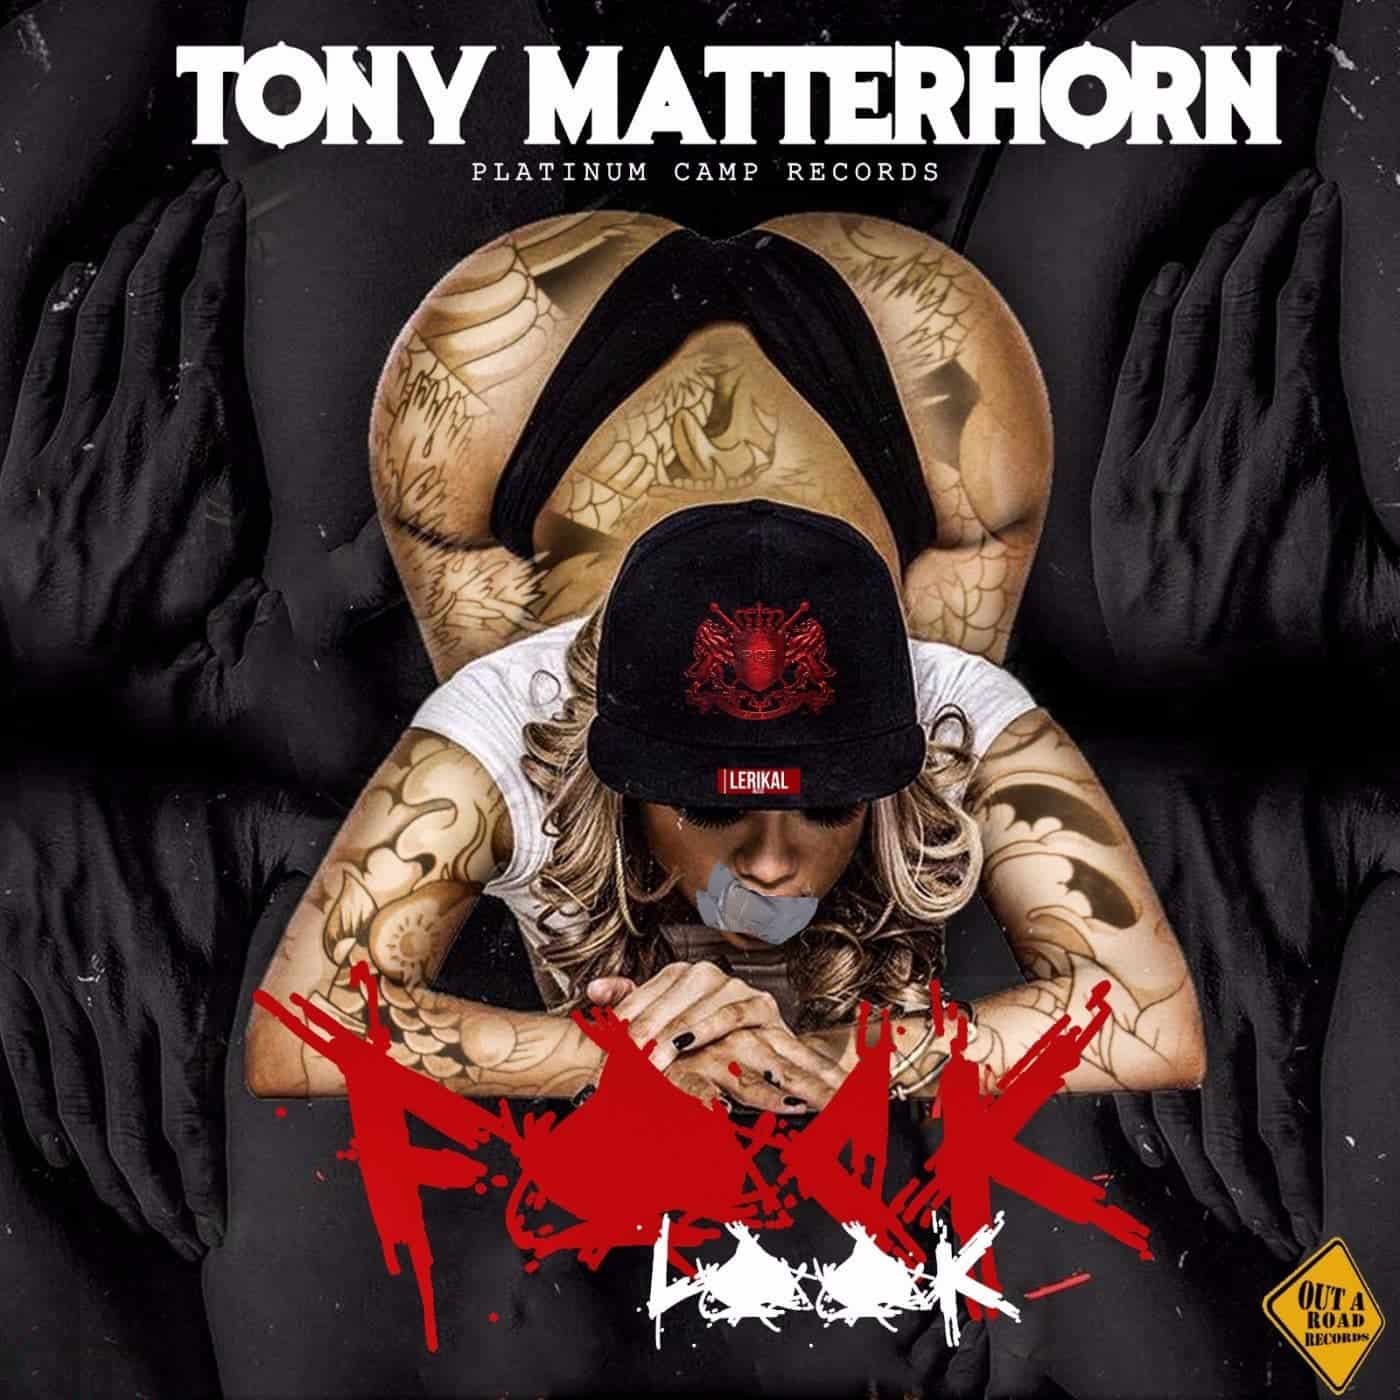 Tony Matterhorn - Fuk Look - Clean & Dirty - Platinum Camp Records-  2015 Dancehall